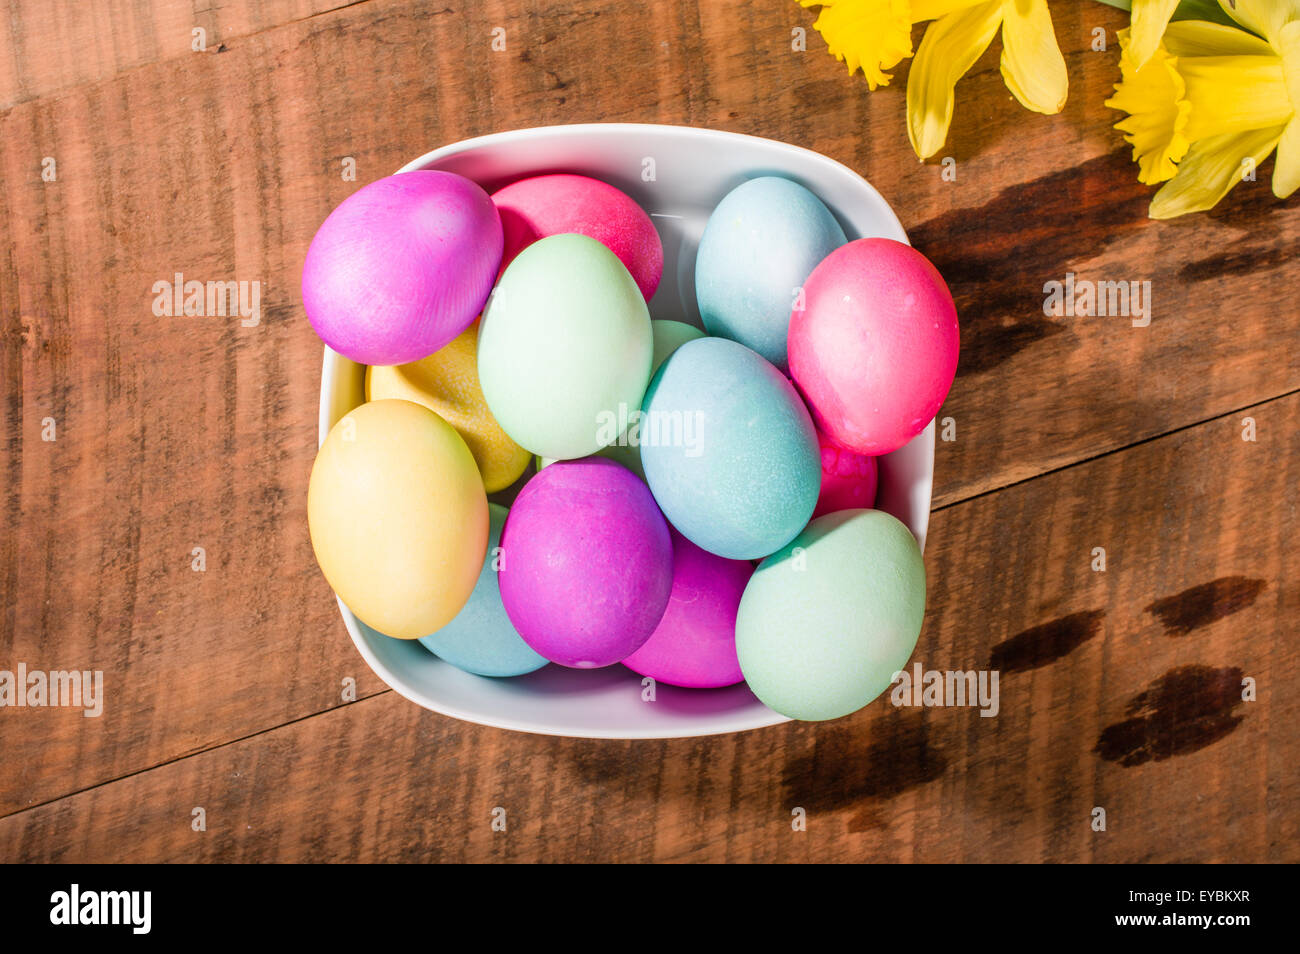 Narciso flores con recipiente de teñido de huevos de Pascua Foto de stock